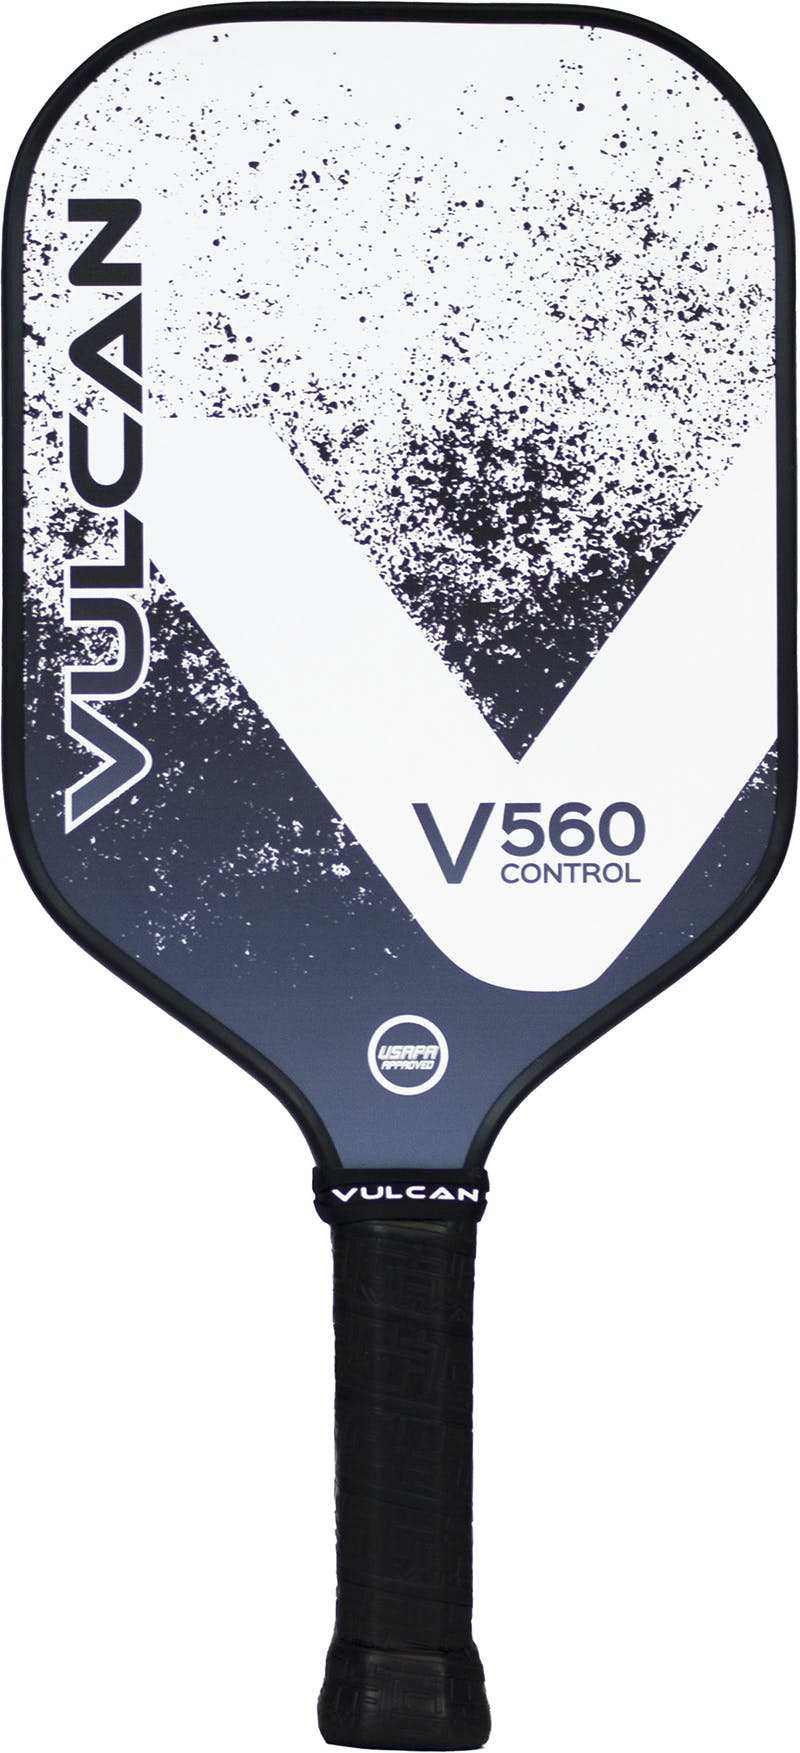 Vulcan V560 Control Pickleball Paddle